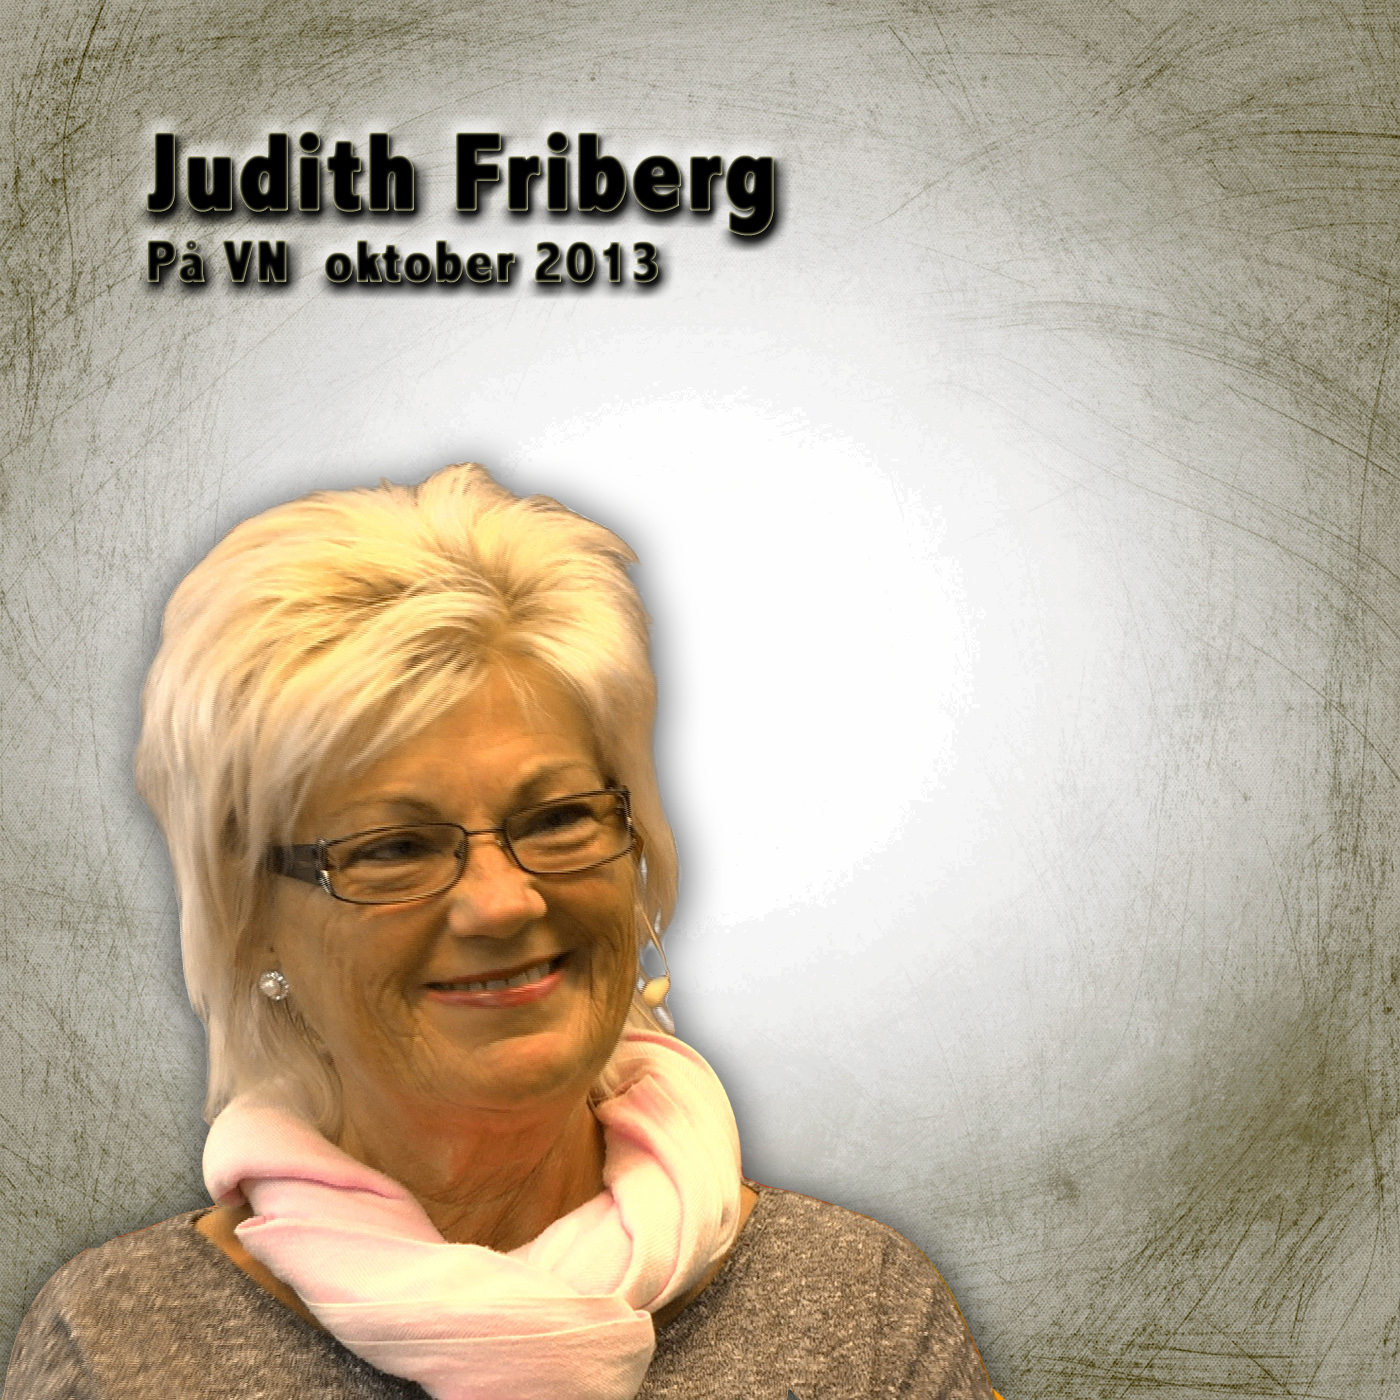 Judith Friberg